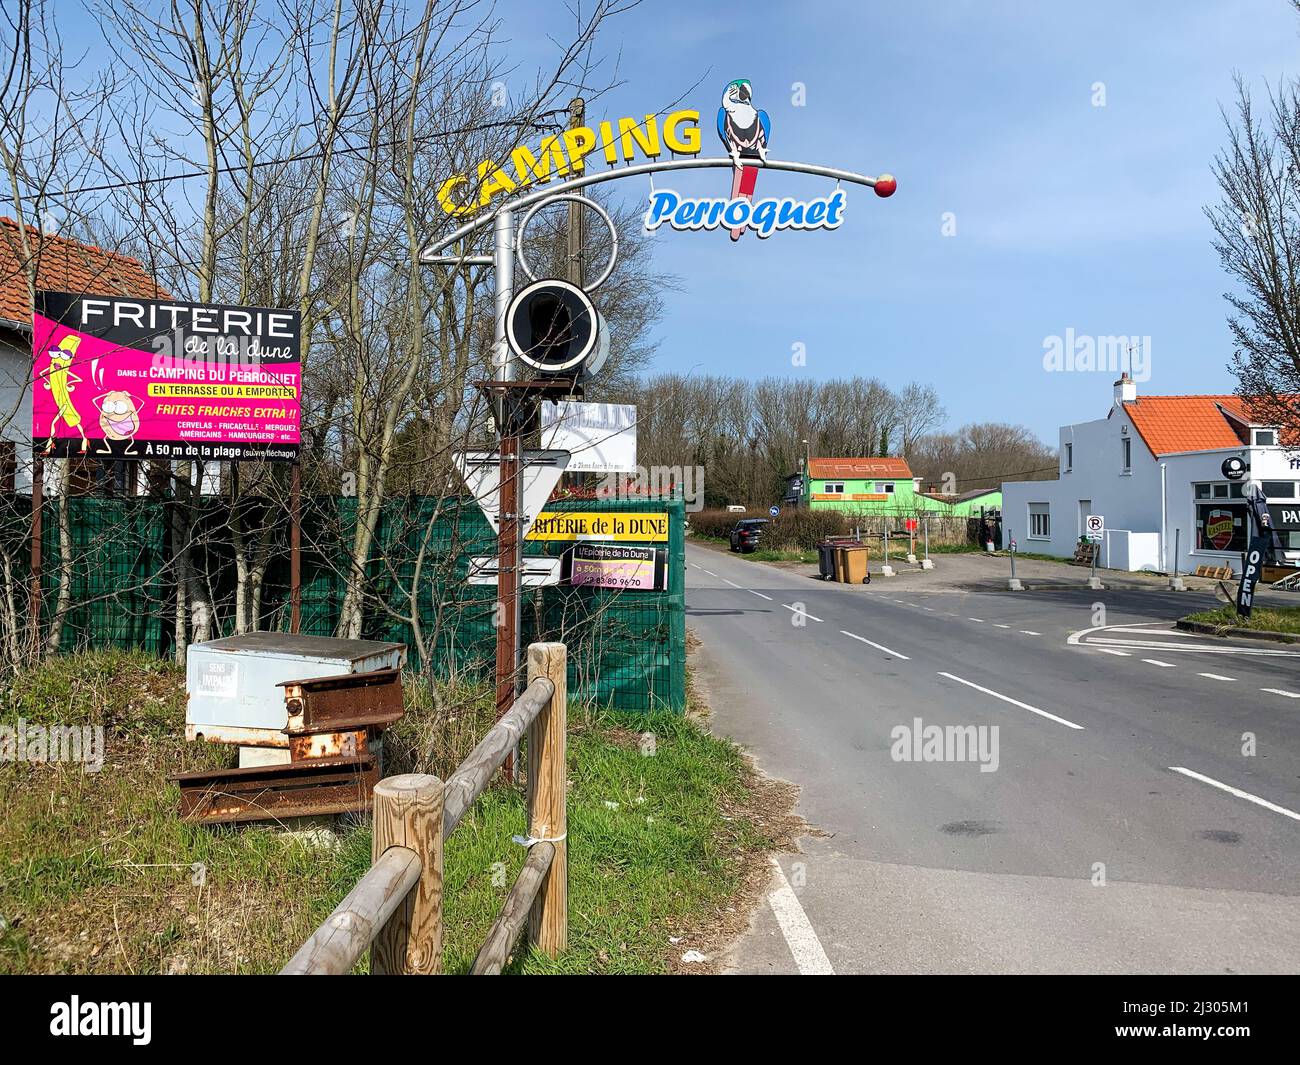 Off-season, Camping du Perroquet, De Panne, Belgium Stock Photo - Alamy